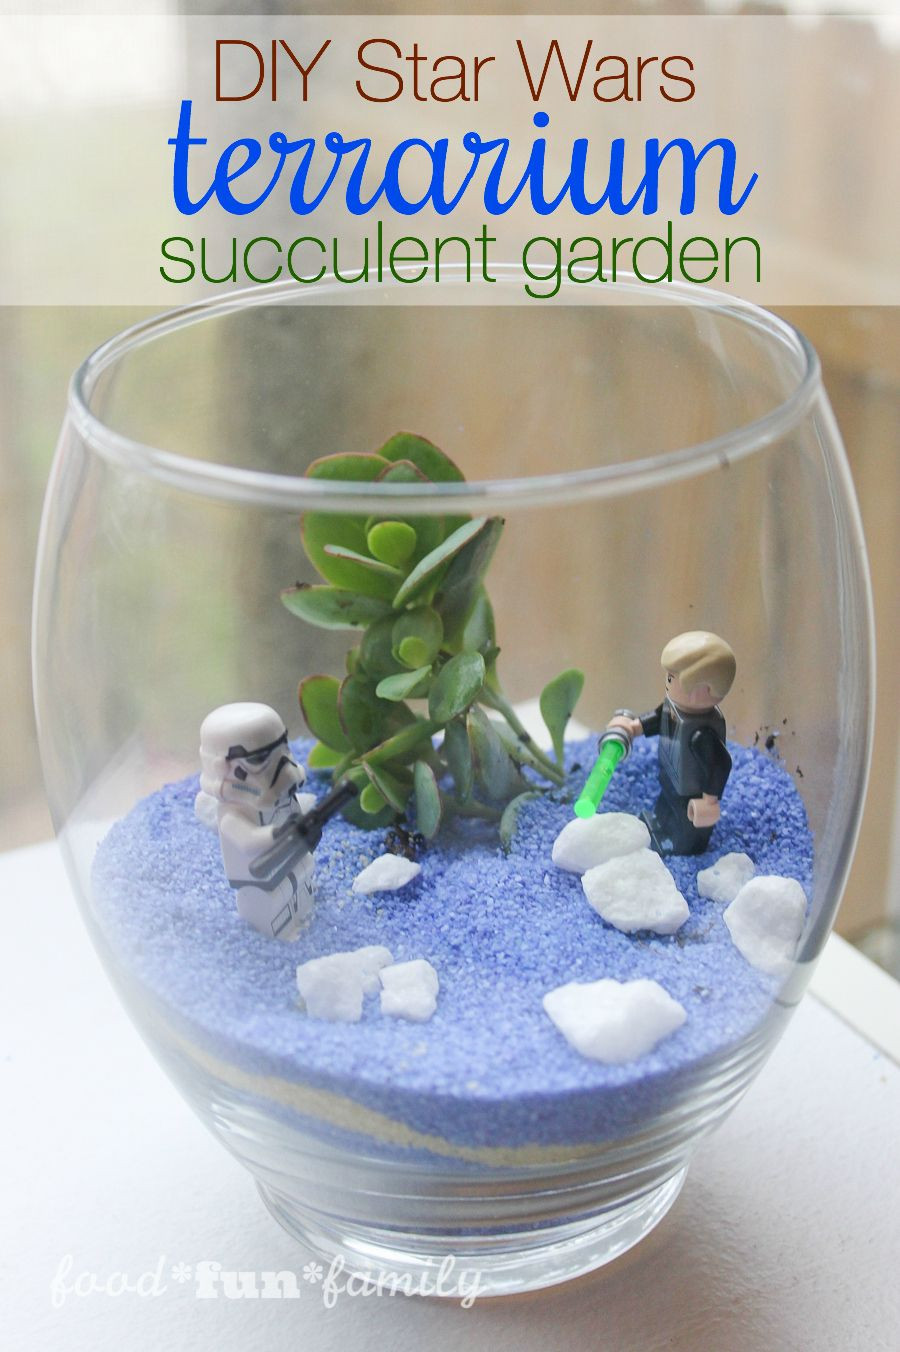 Best ideas about DIY Succulent Garden
. Save or Pin DIY Star Wars Terrarium Succulent Garden Now.